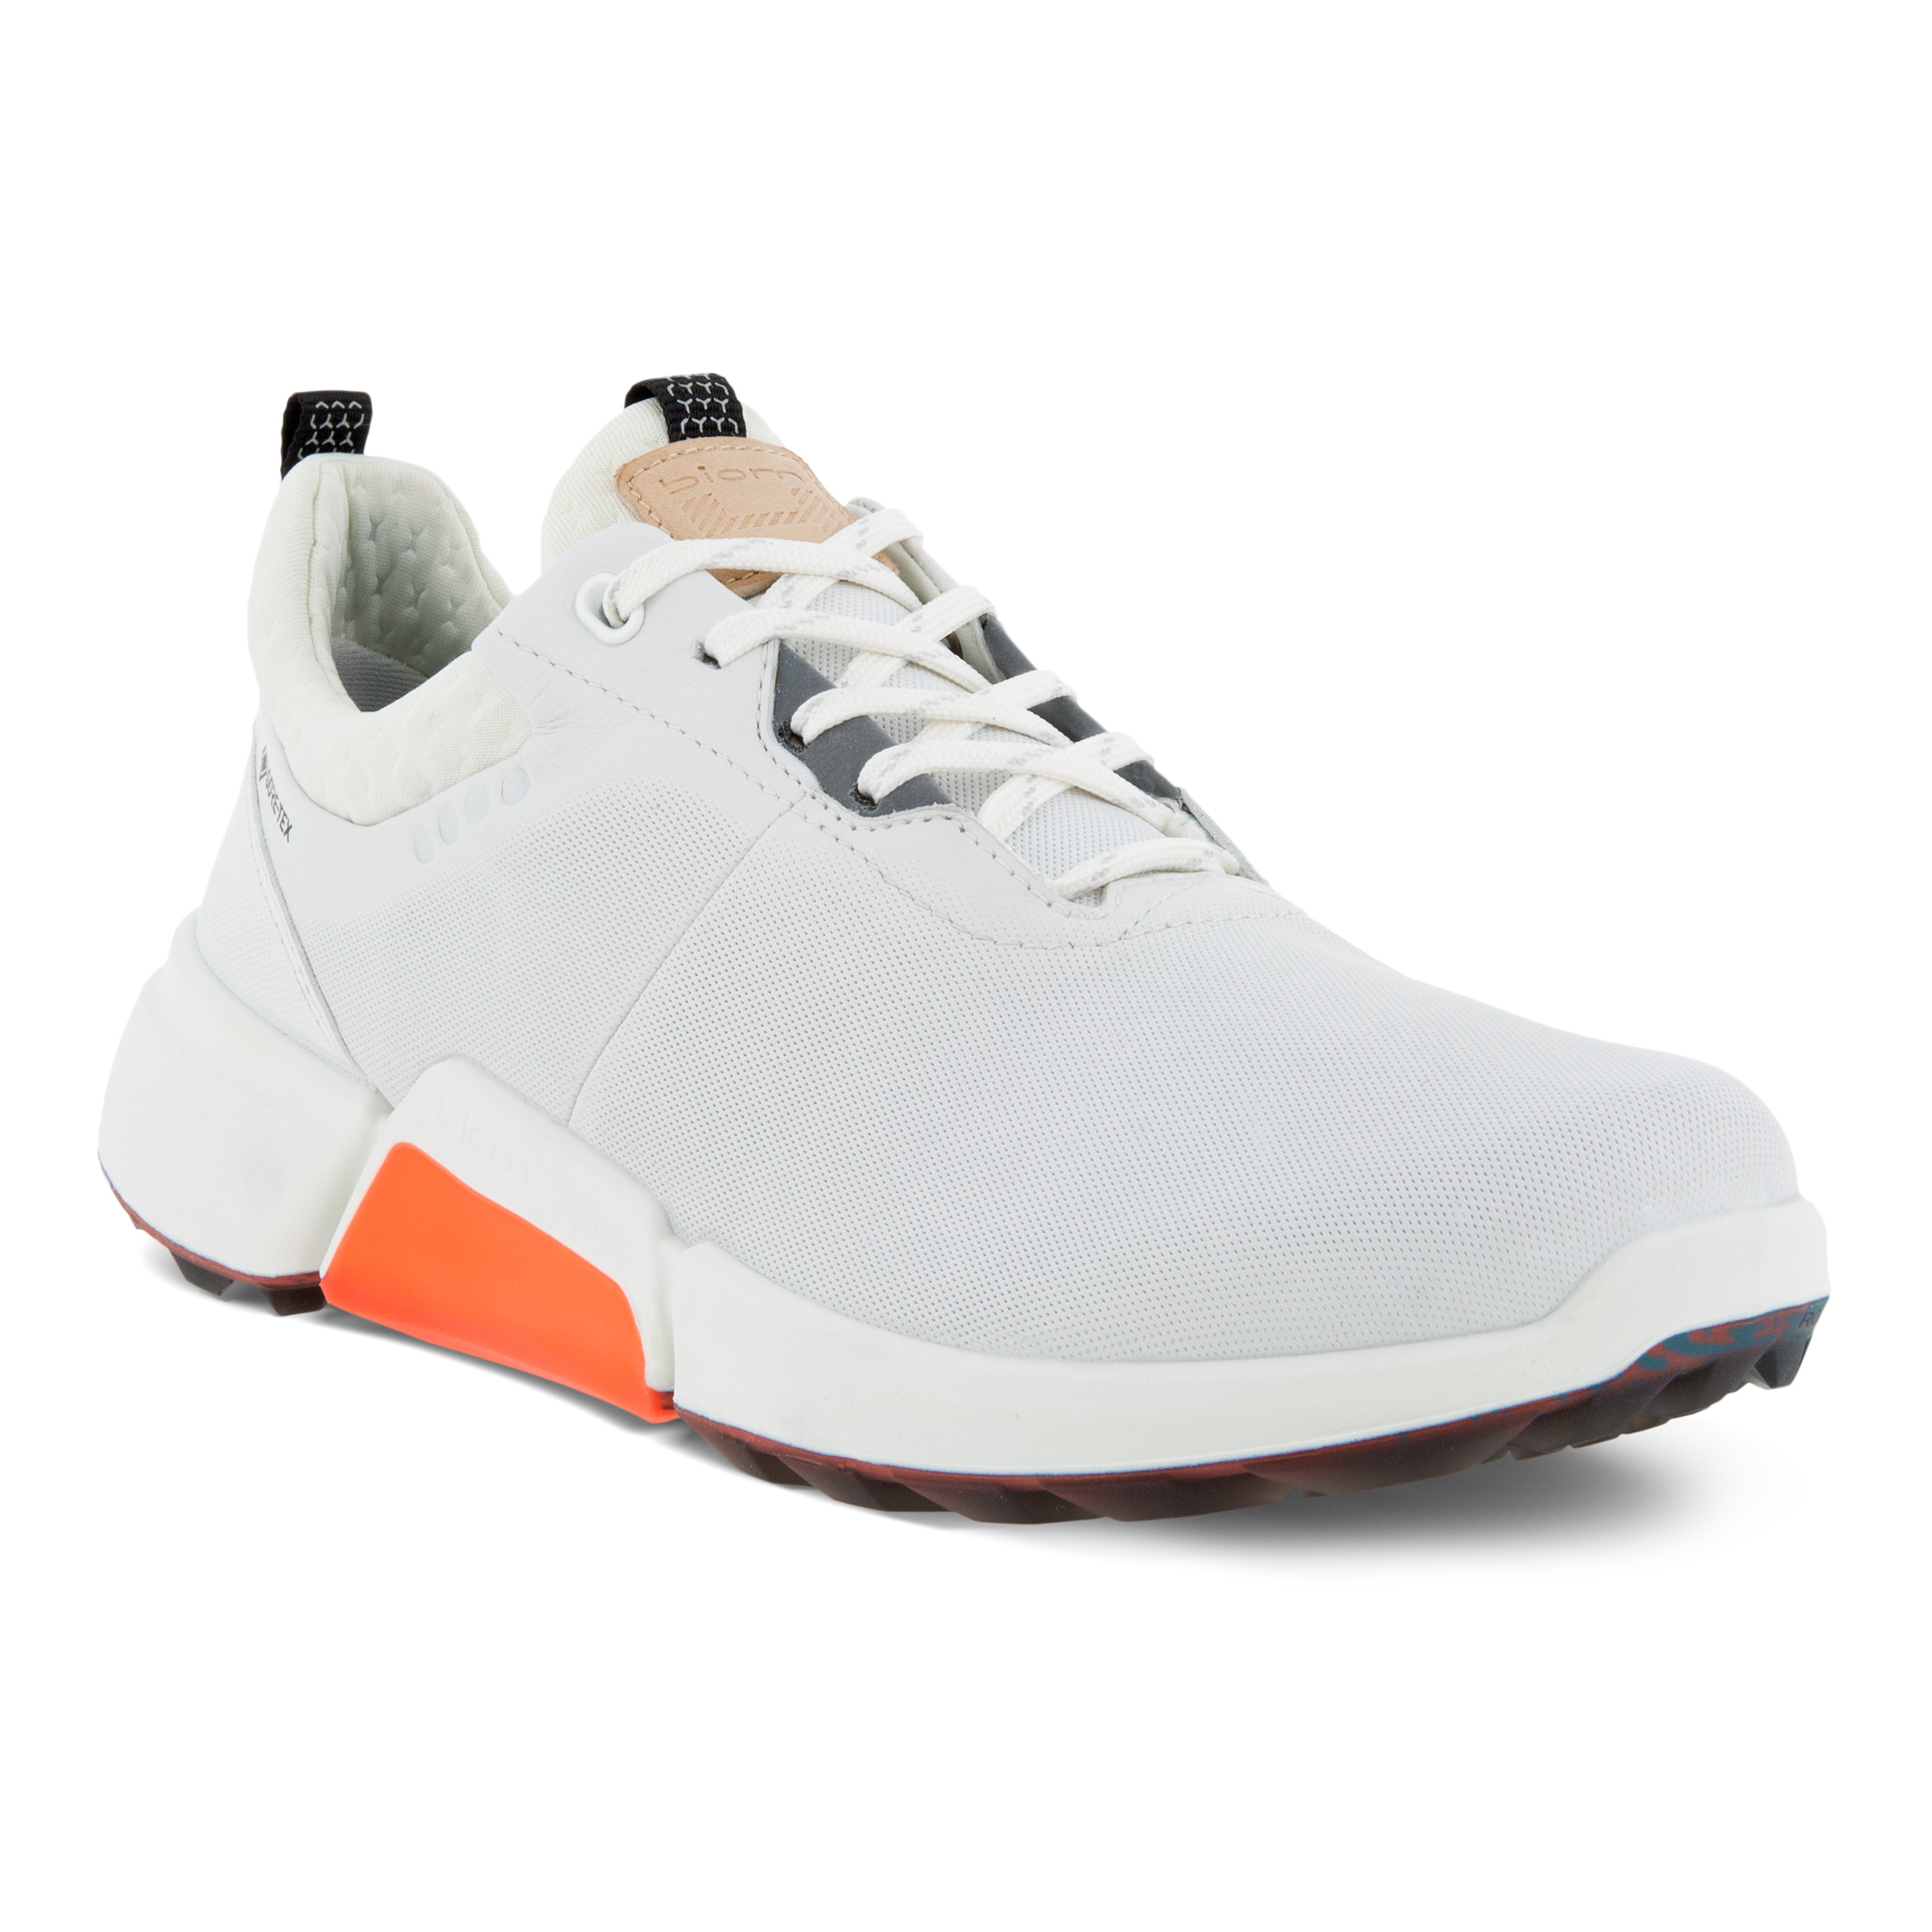 ECCO Women's Biom H4 Golf Shoes /White red blue